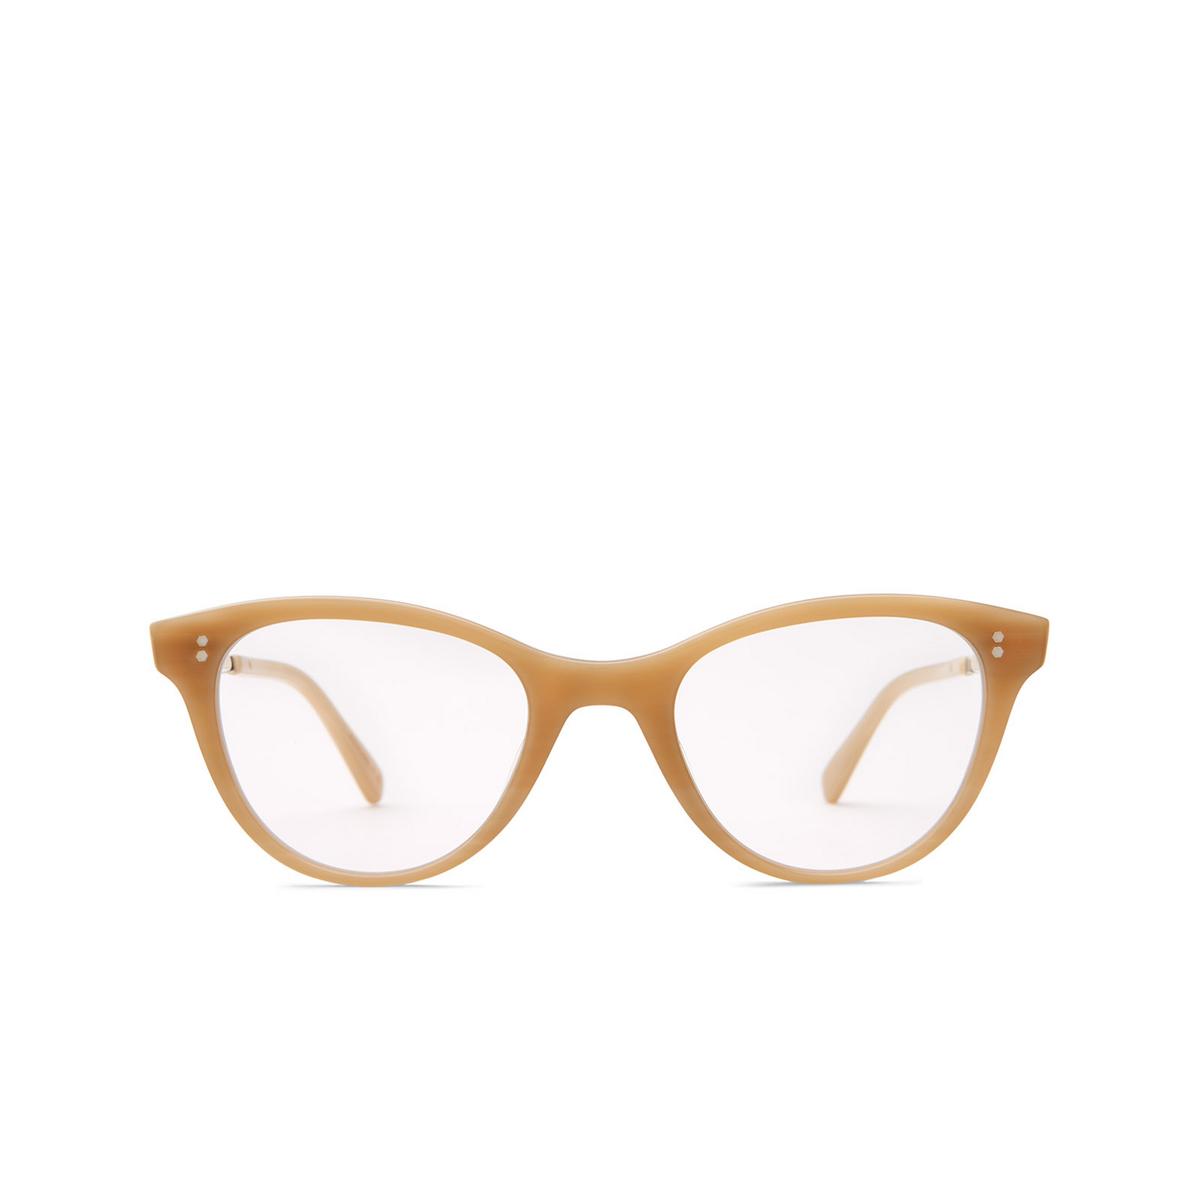 Mr. Leight TAYLOR C Eyeglasses DESA-PLT Desert Sand-Platinum - front view